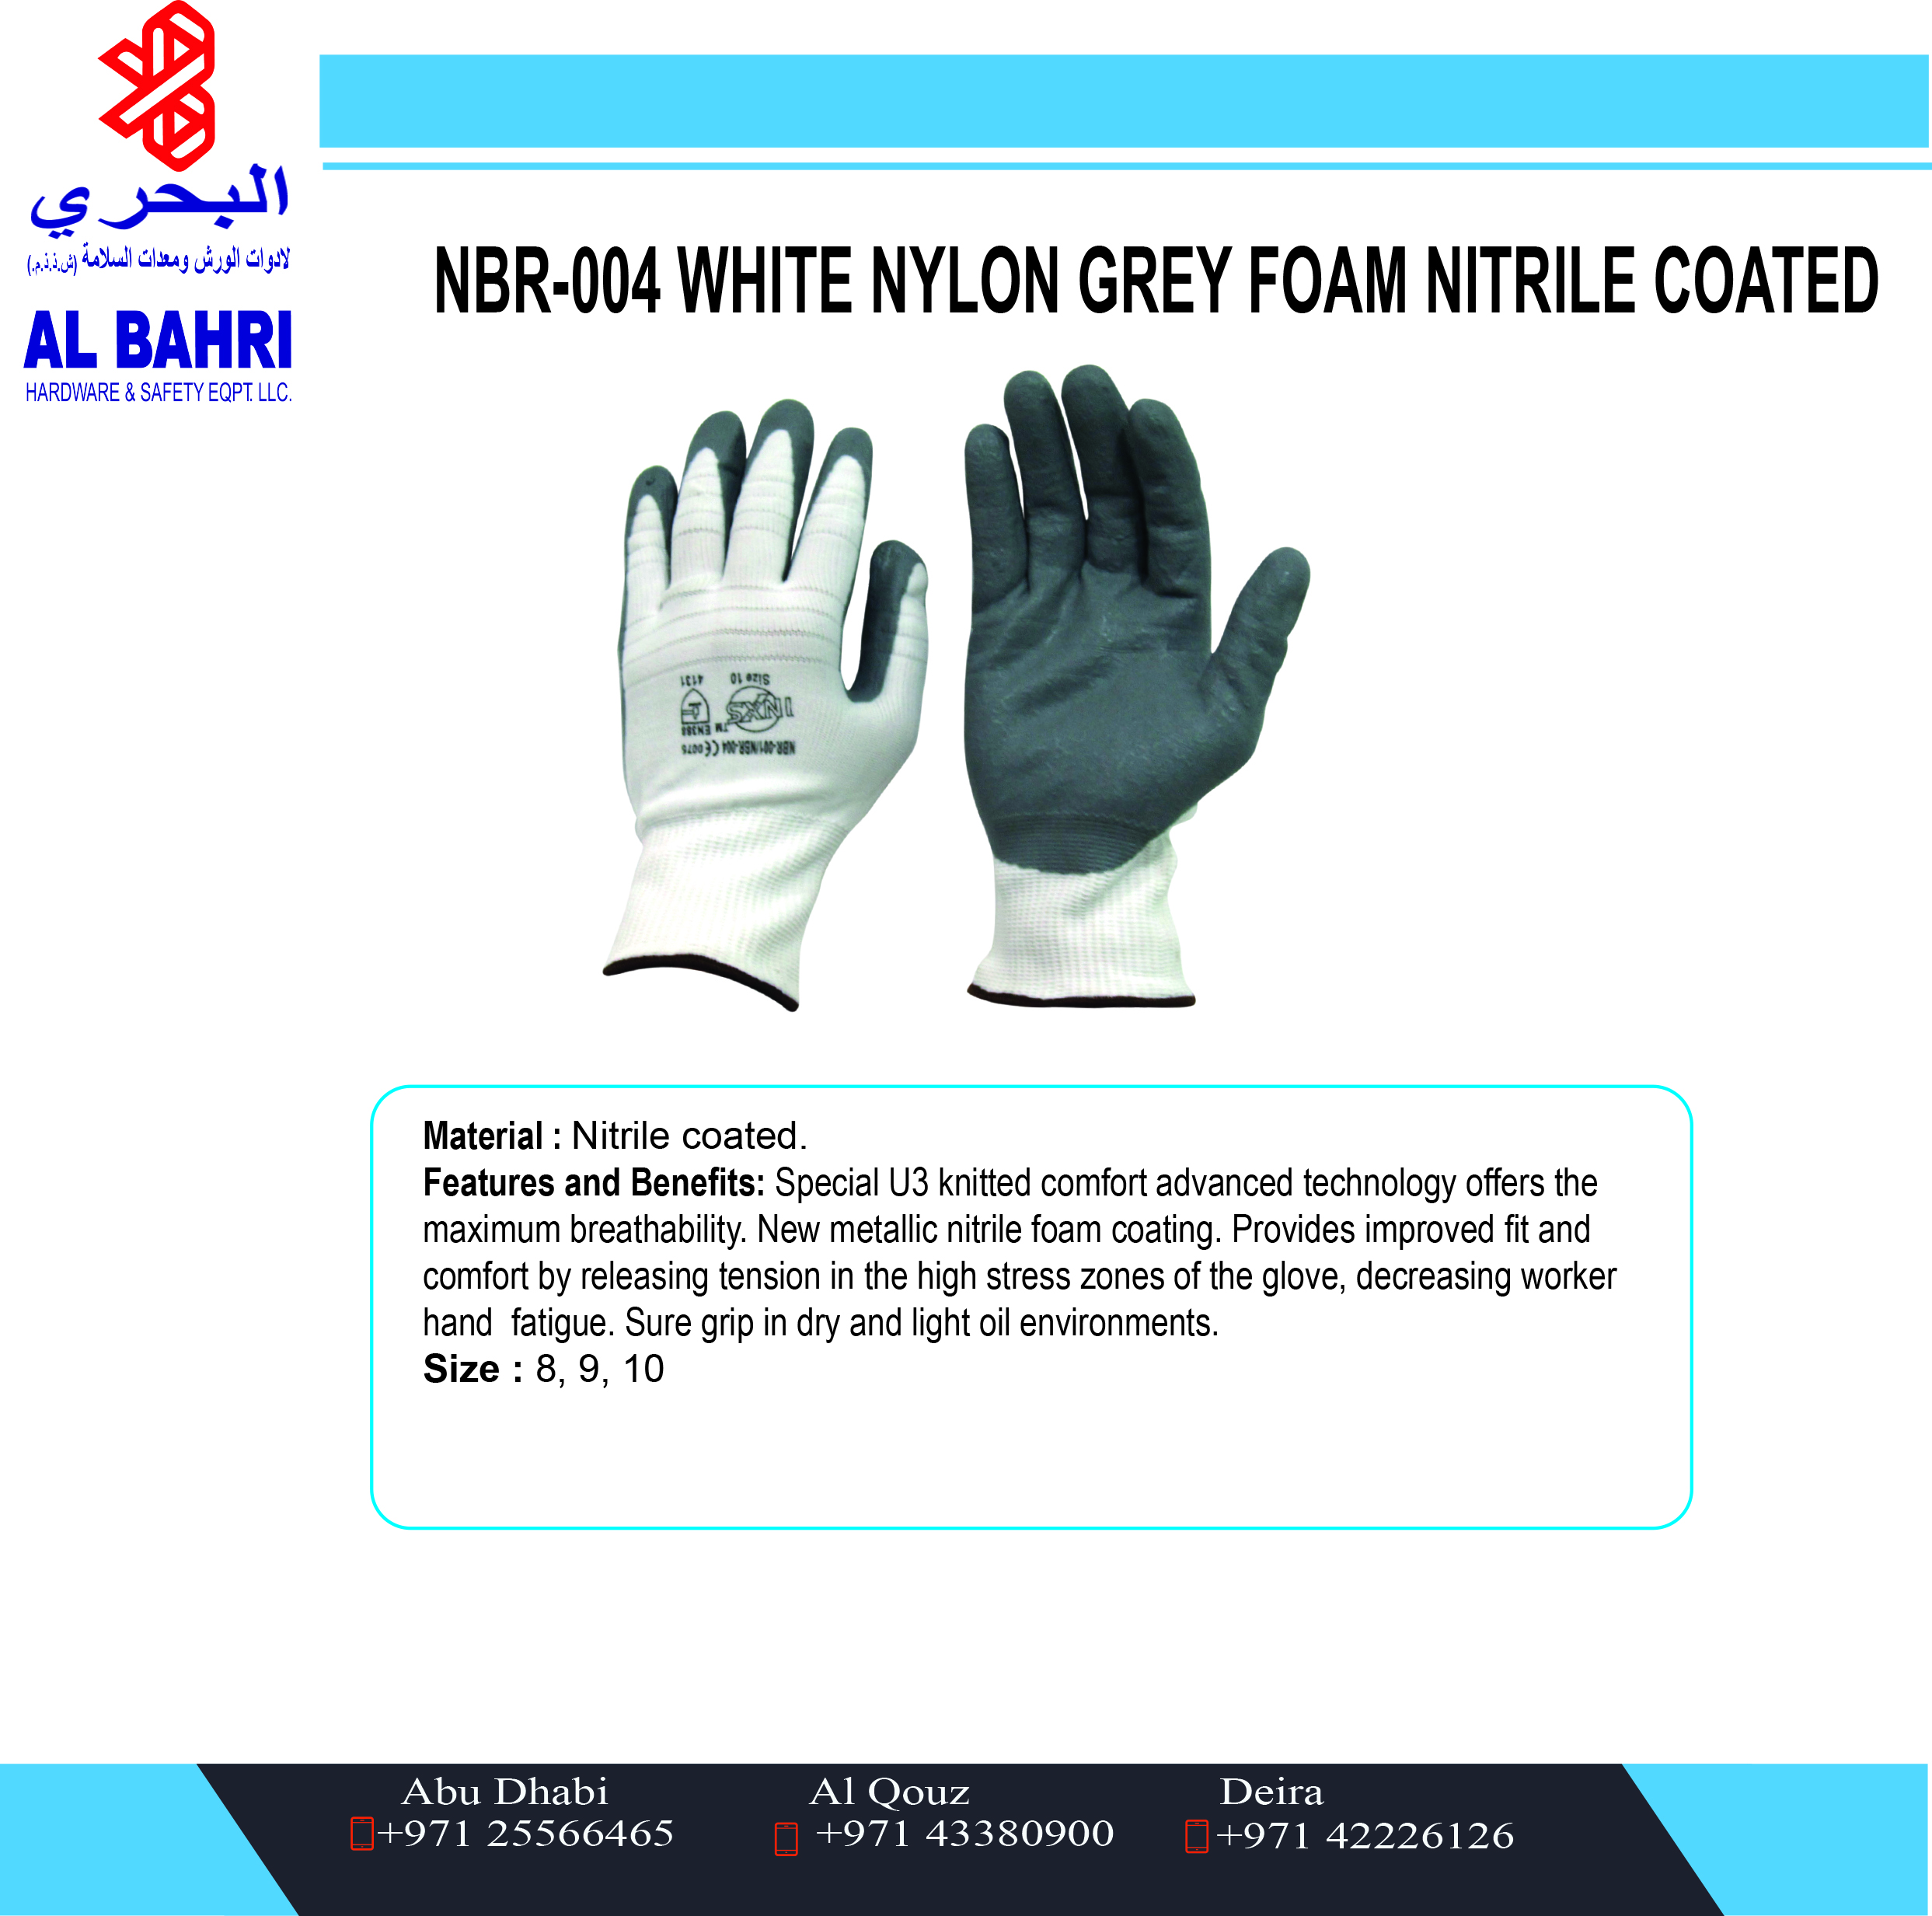 NBR-004 White Nylon Grey Foam Nitrile Coated Gloves